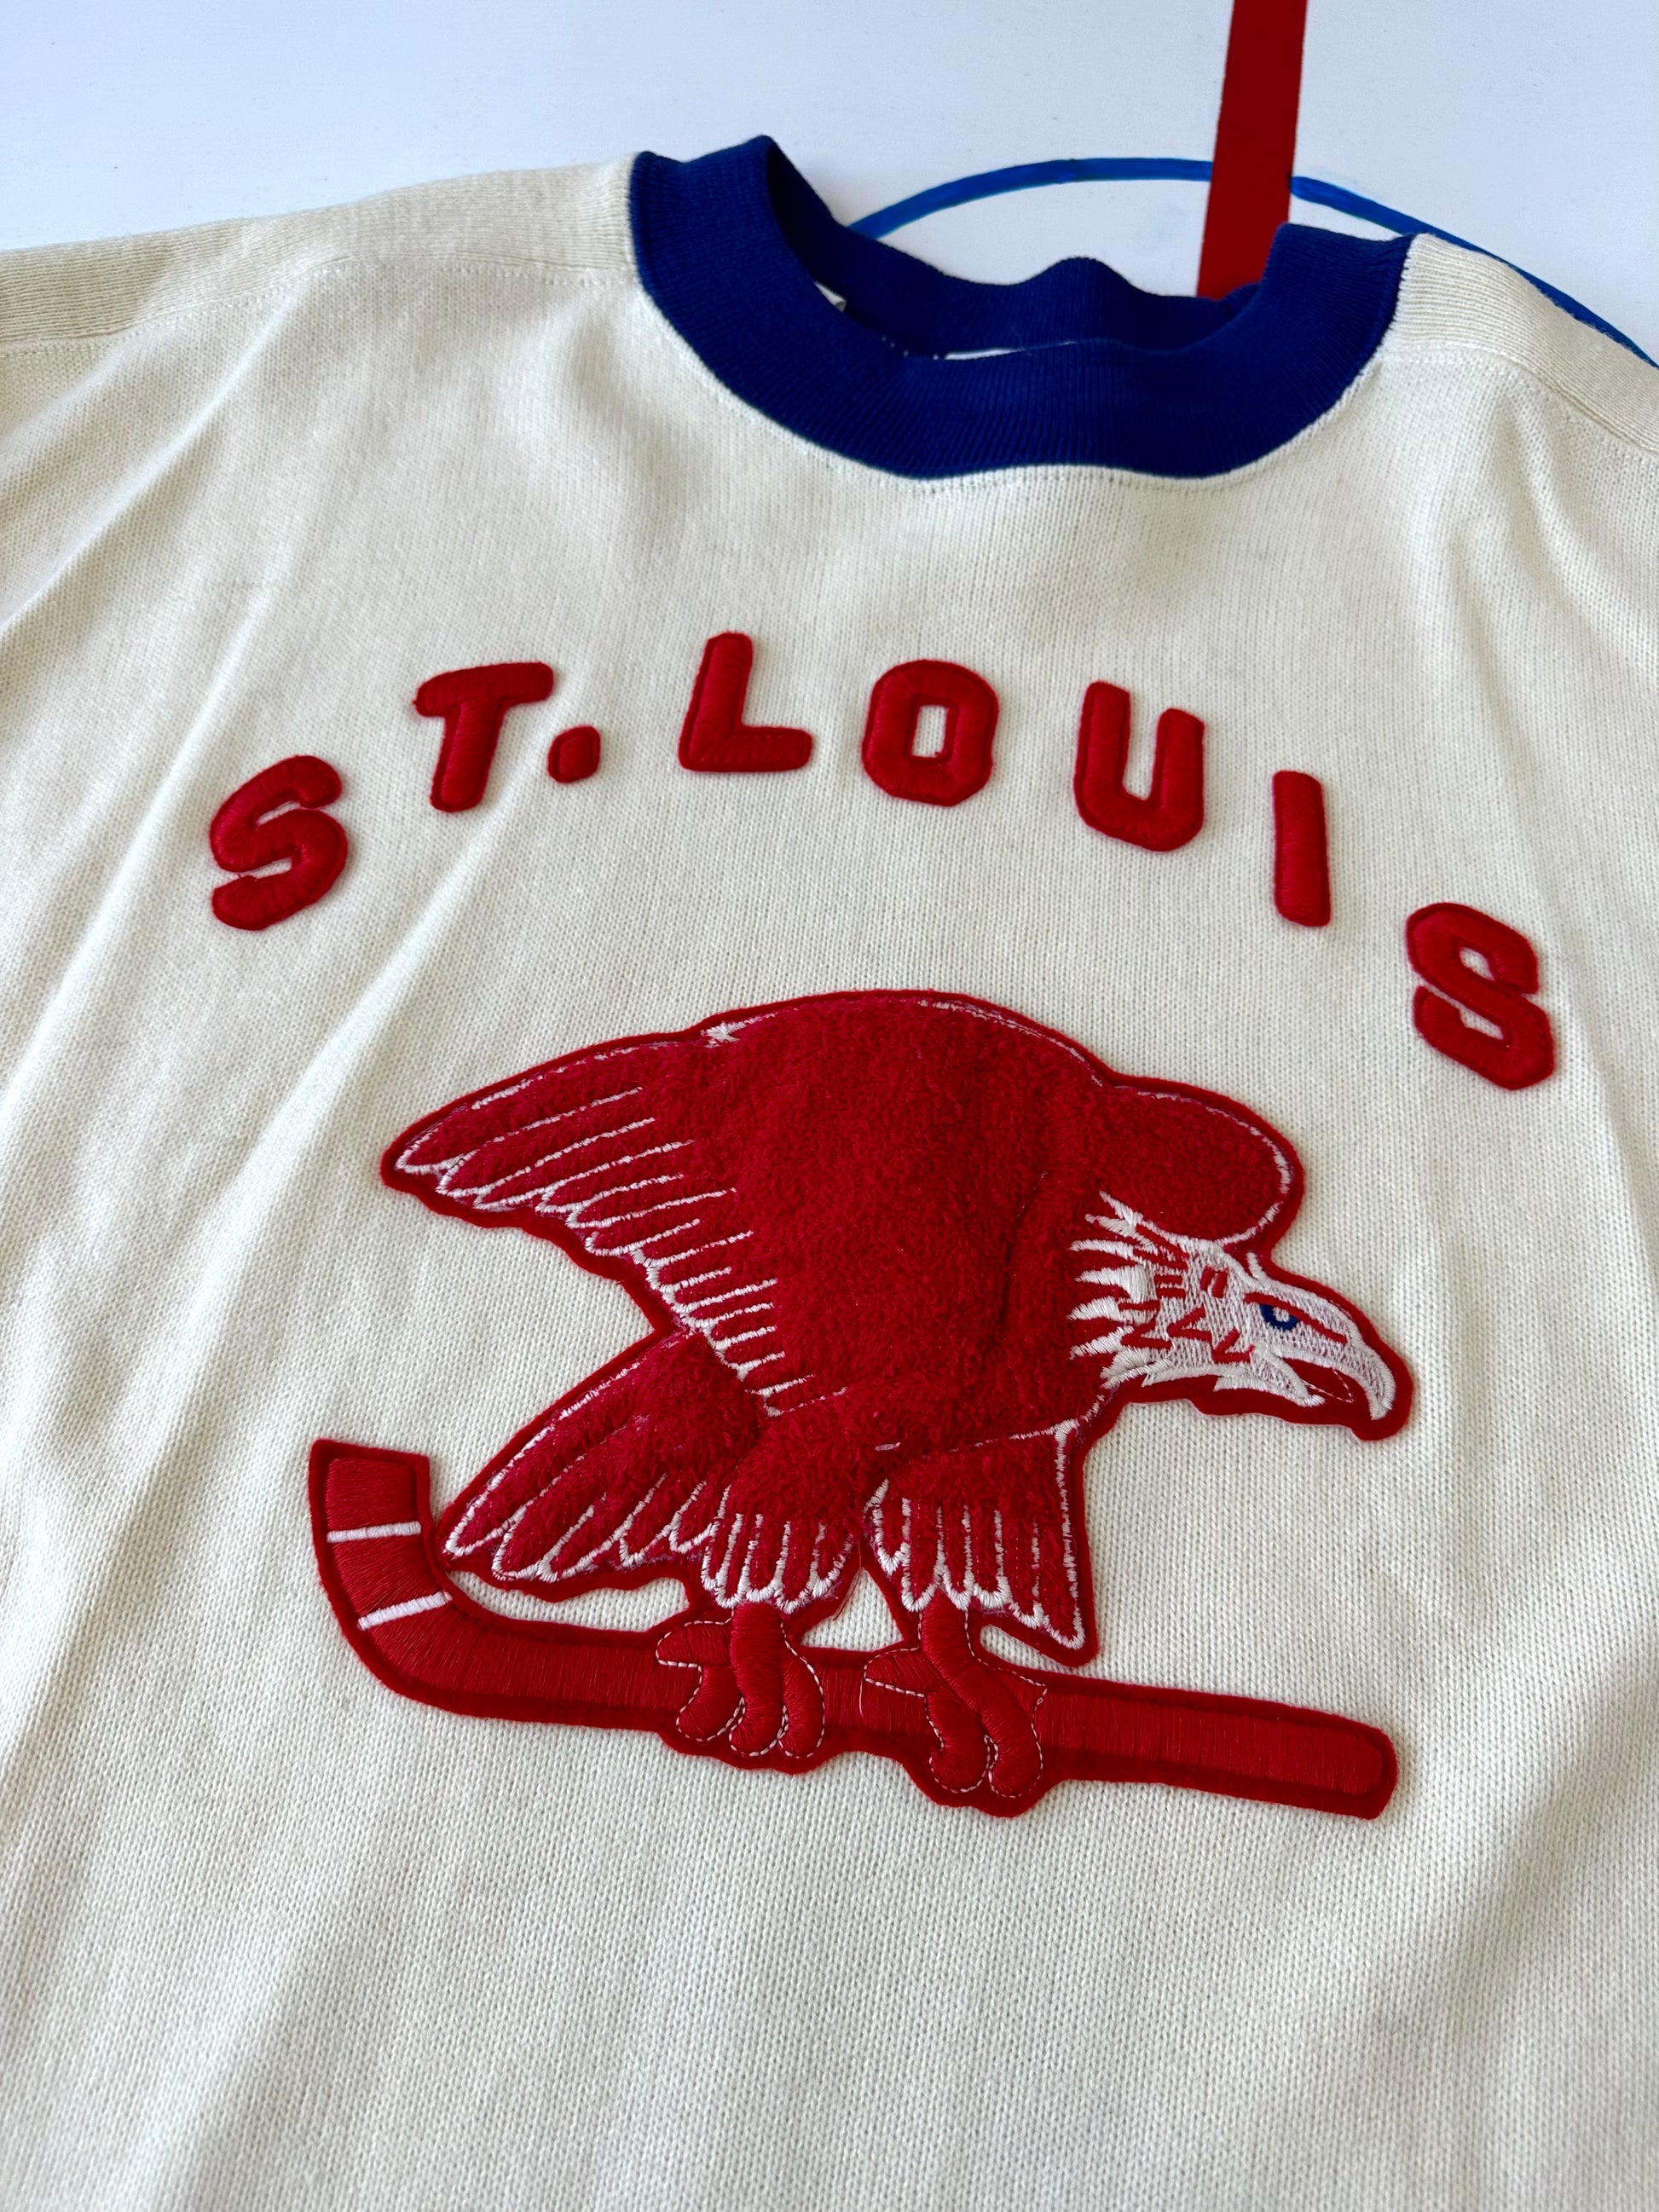 Vintage NHL logos - St. Louis Eagles Patch